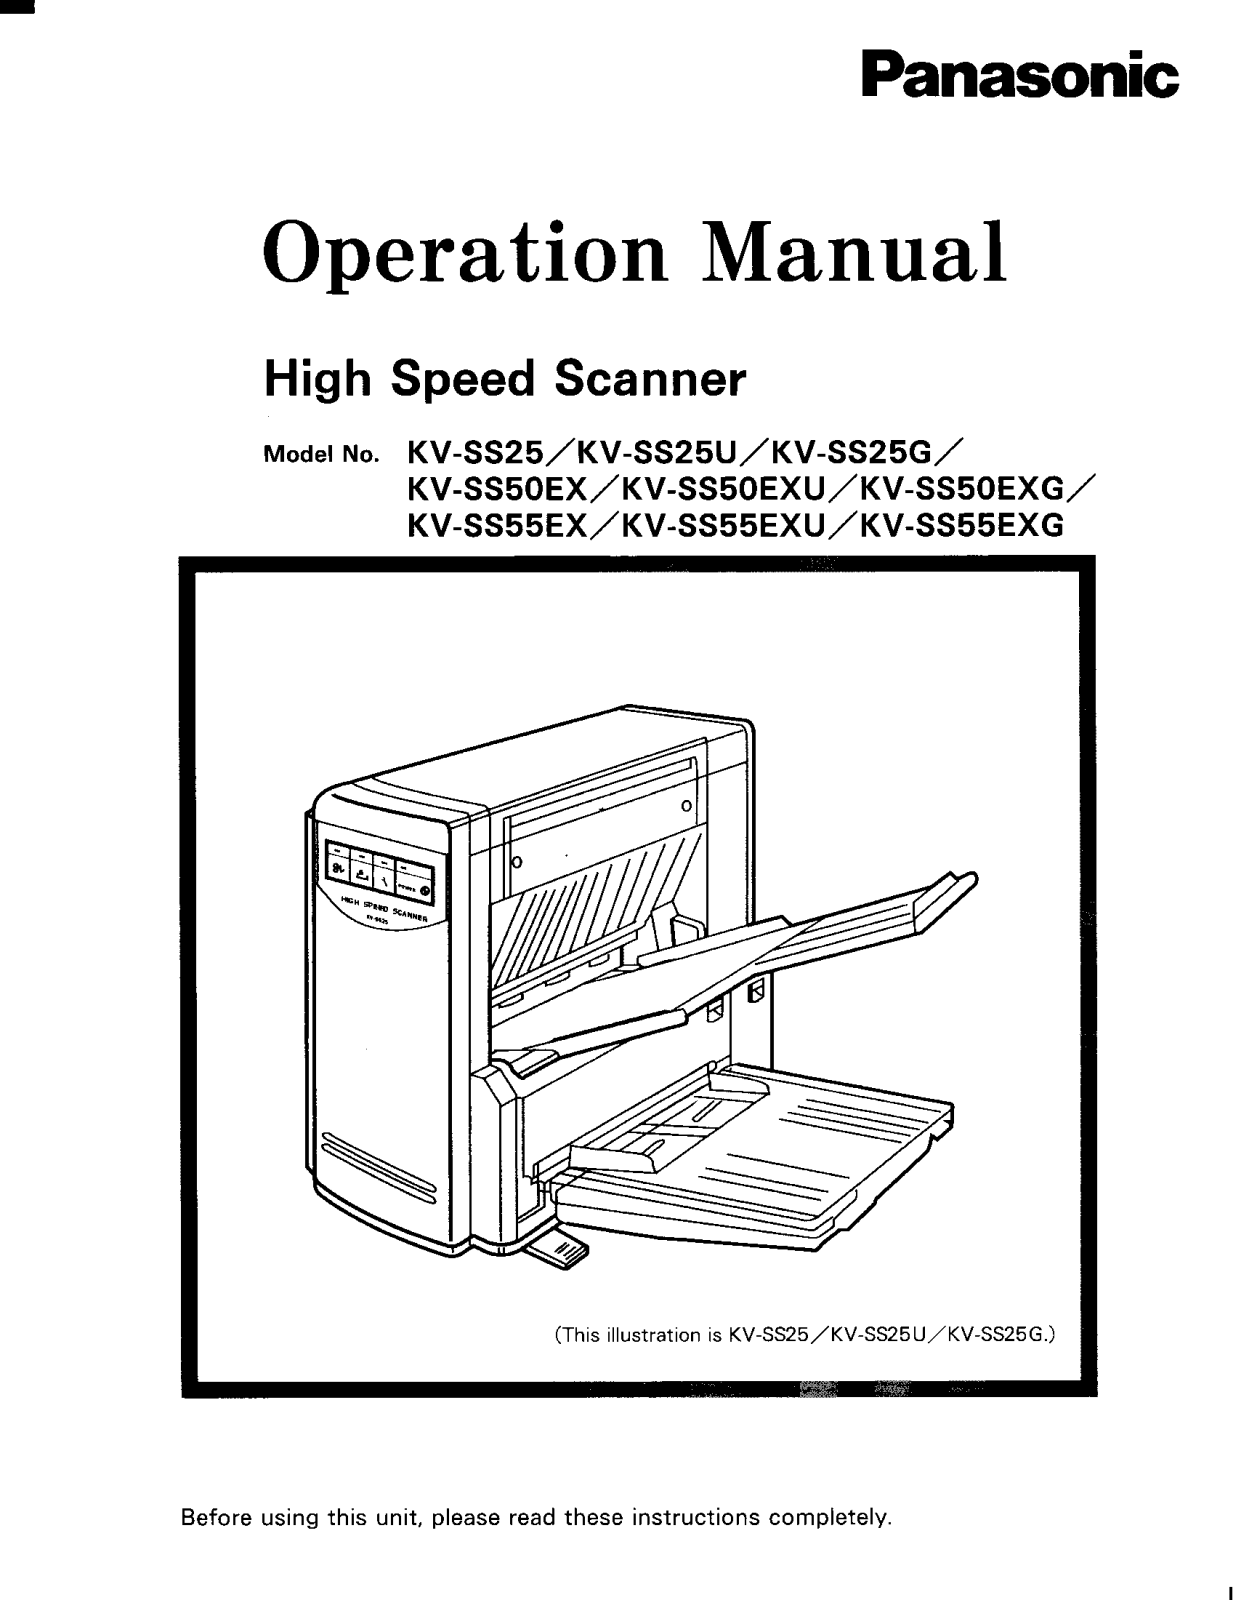 Panasonic kw-ss5055ex Operation Manual